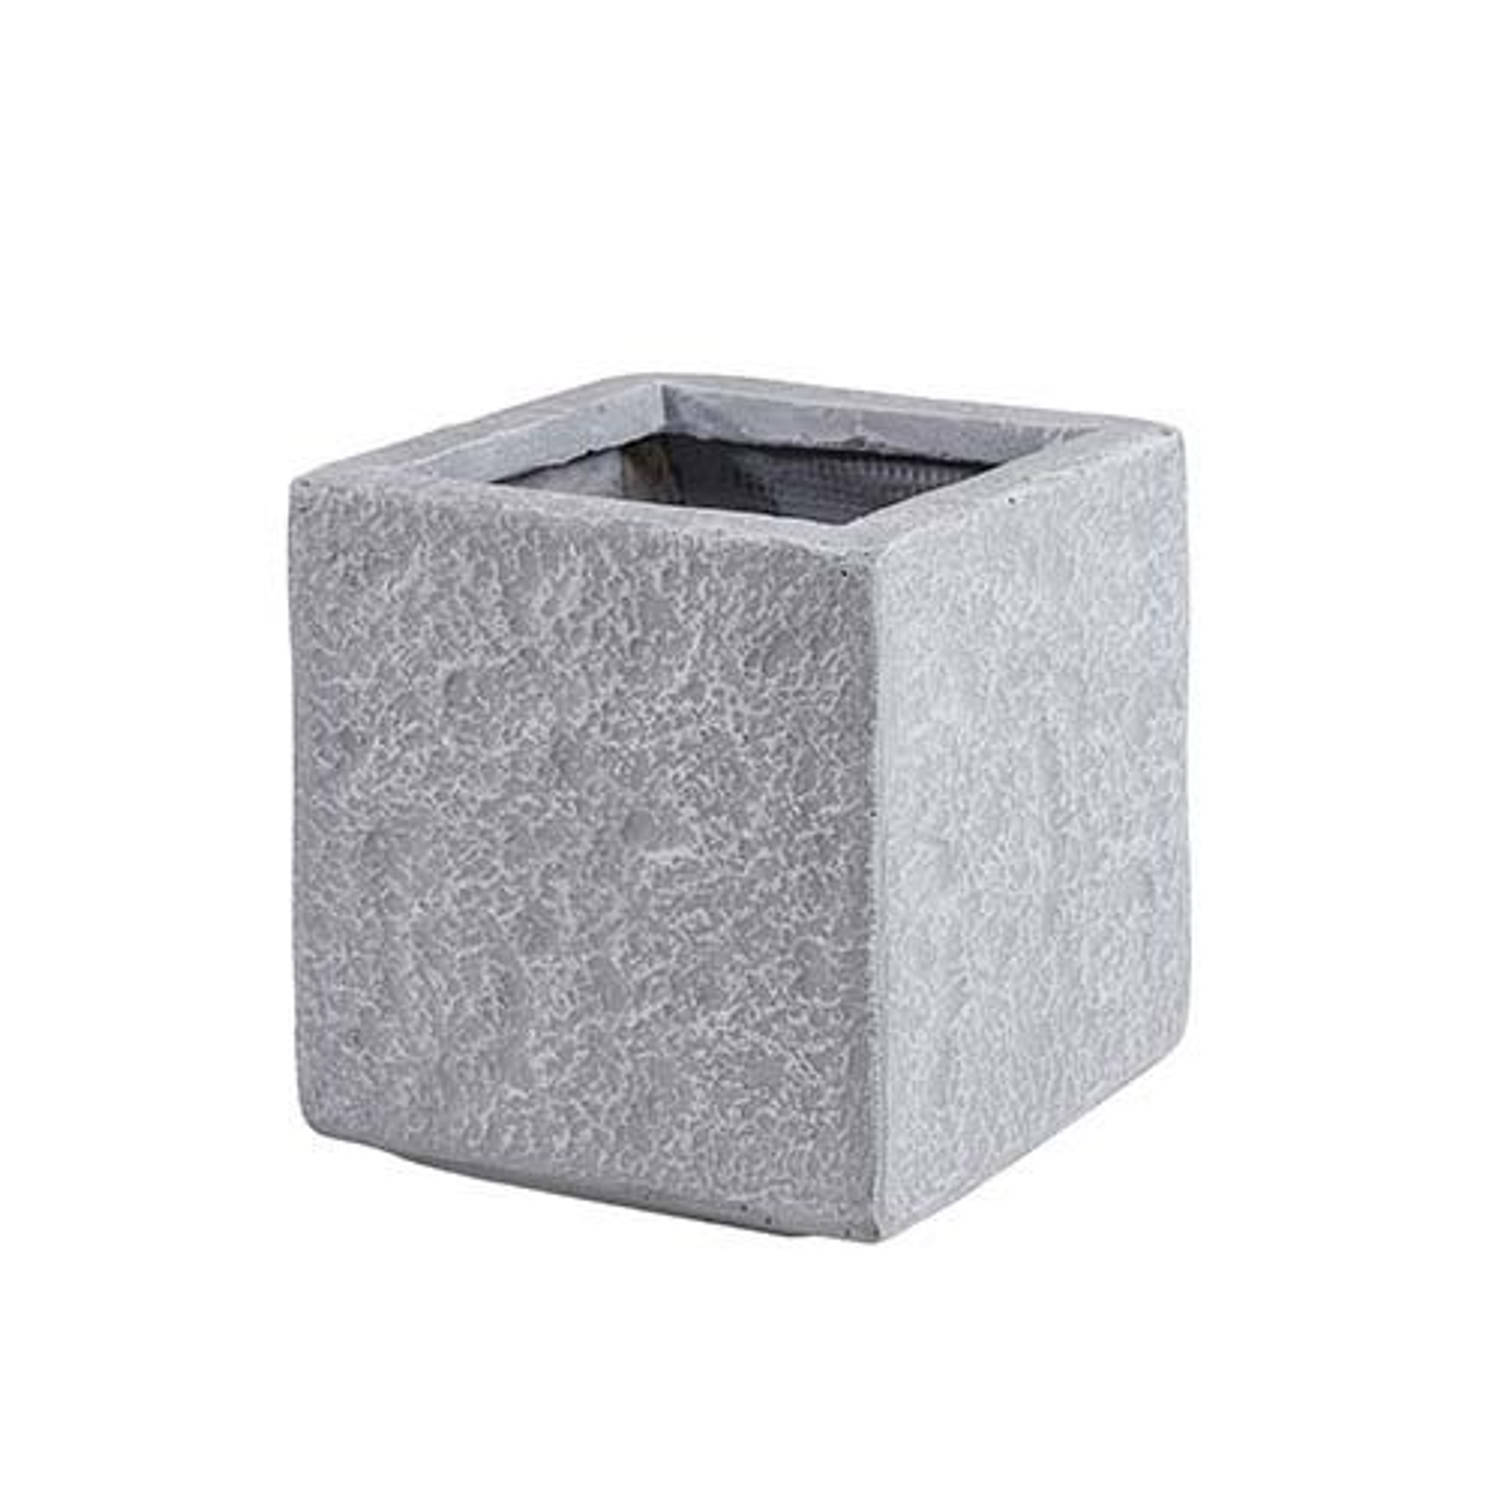 E'lite - Bloempot reykjavik vierkant cement 25x25 cm